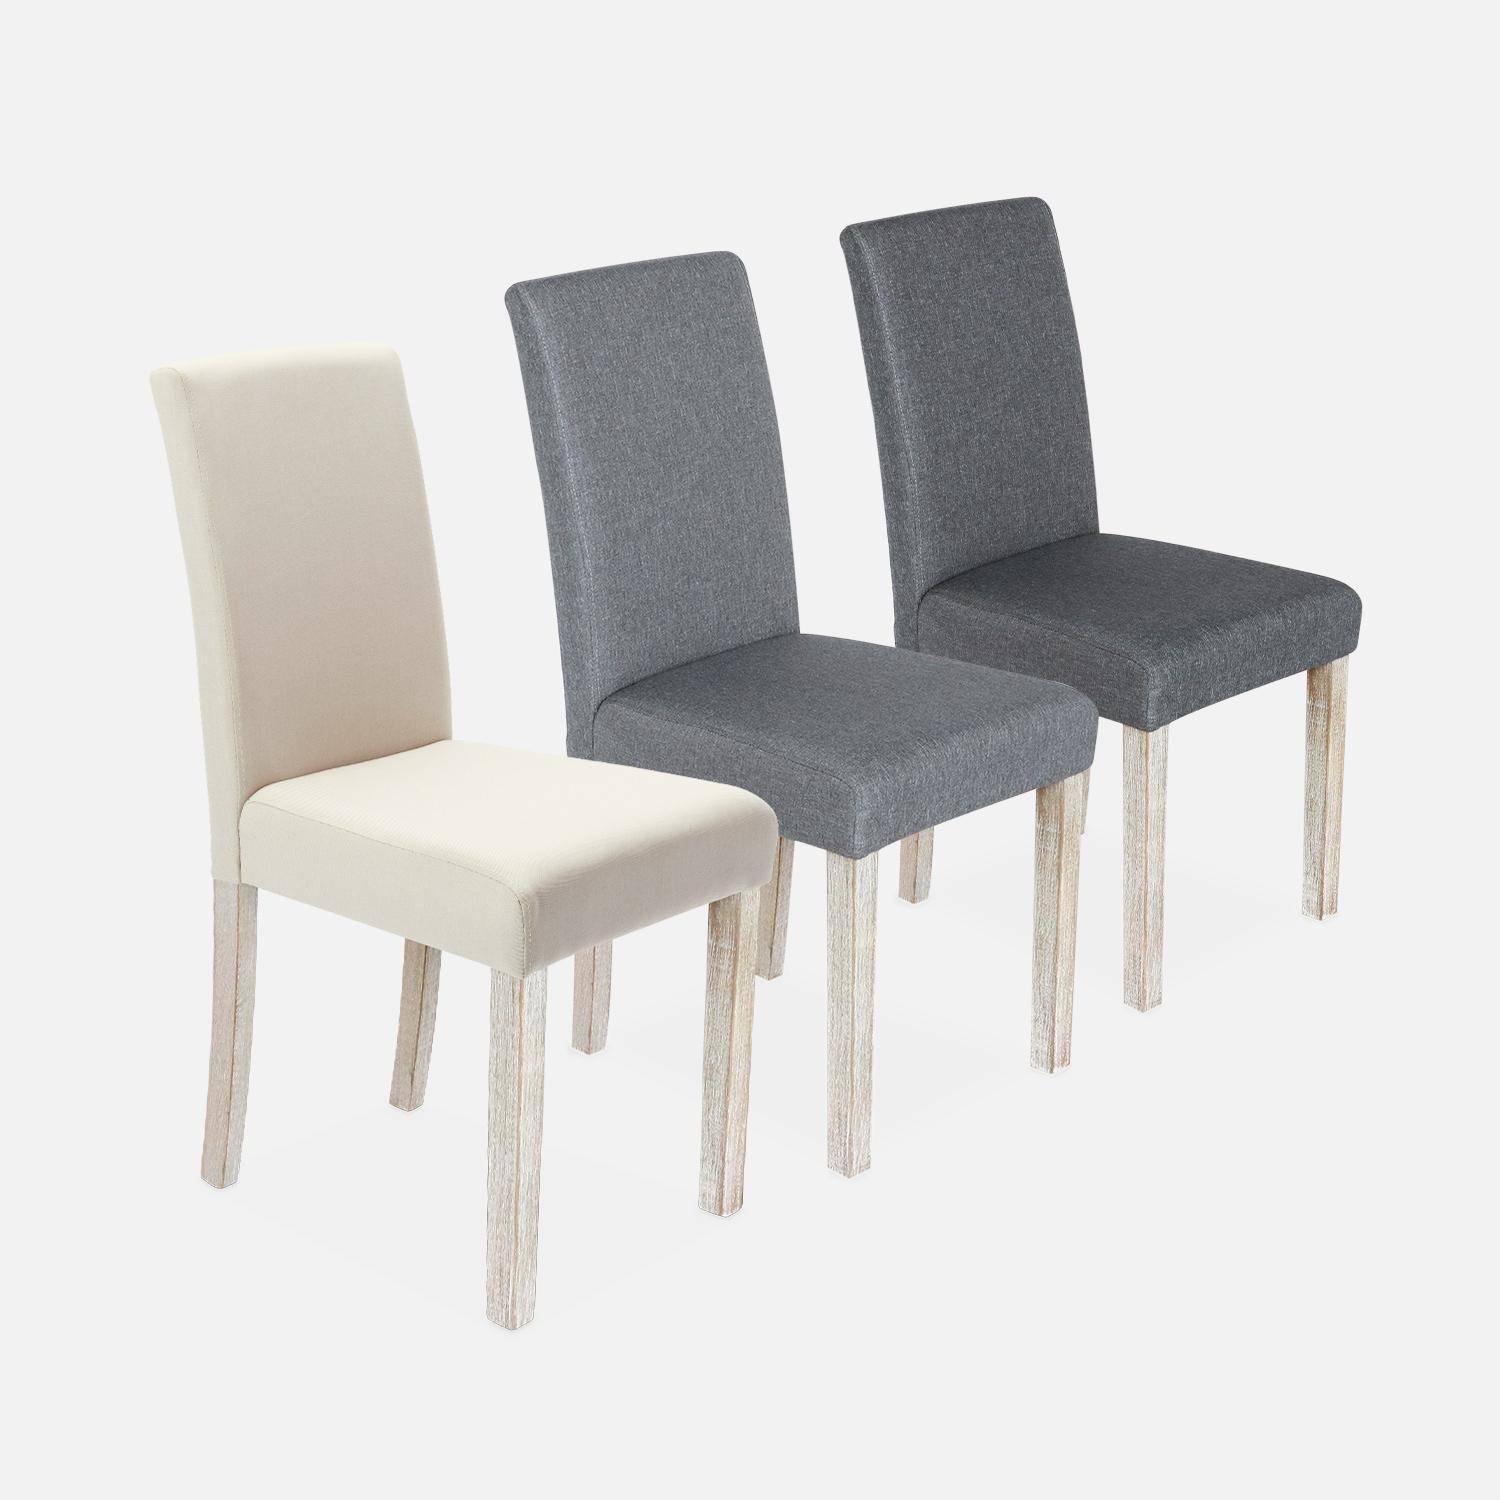 Set van 4 stoelen - Rita - stoffen stoelen, ceruse houten poten, beige,sweeek,Photo5